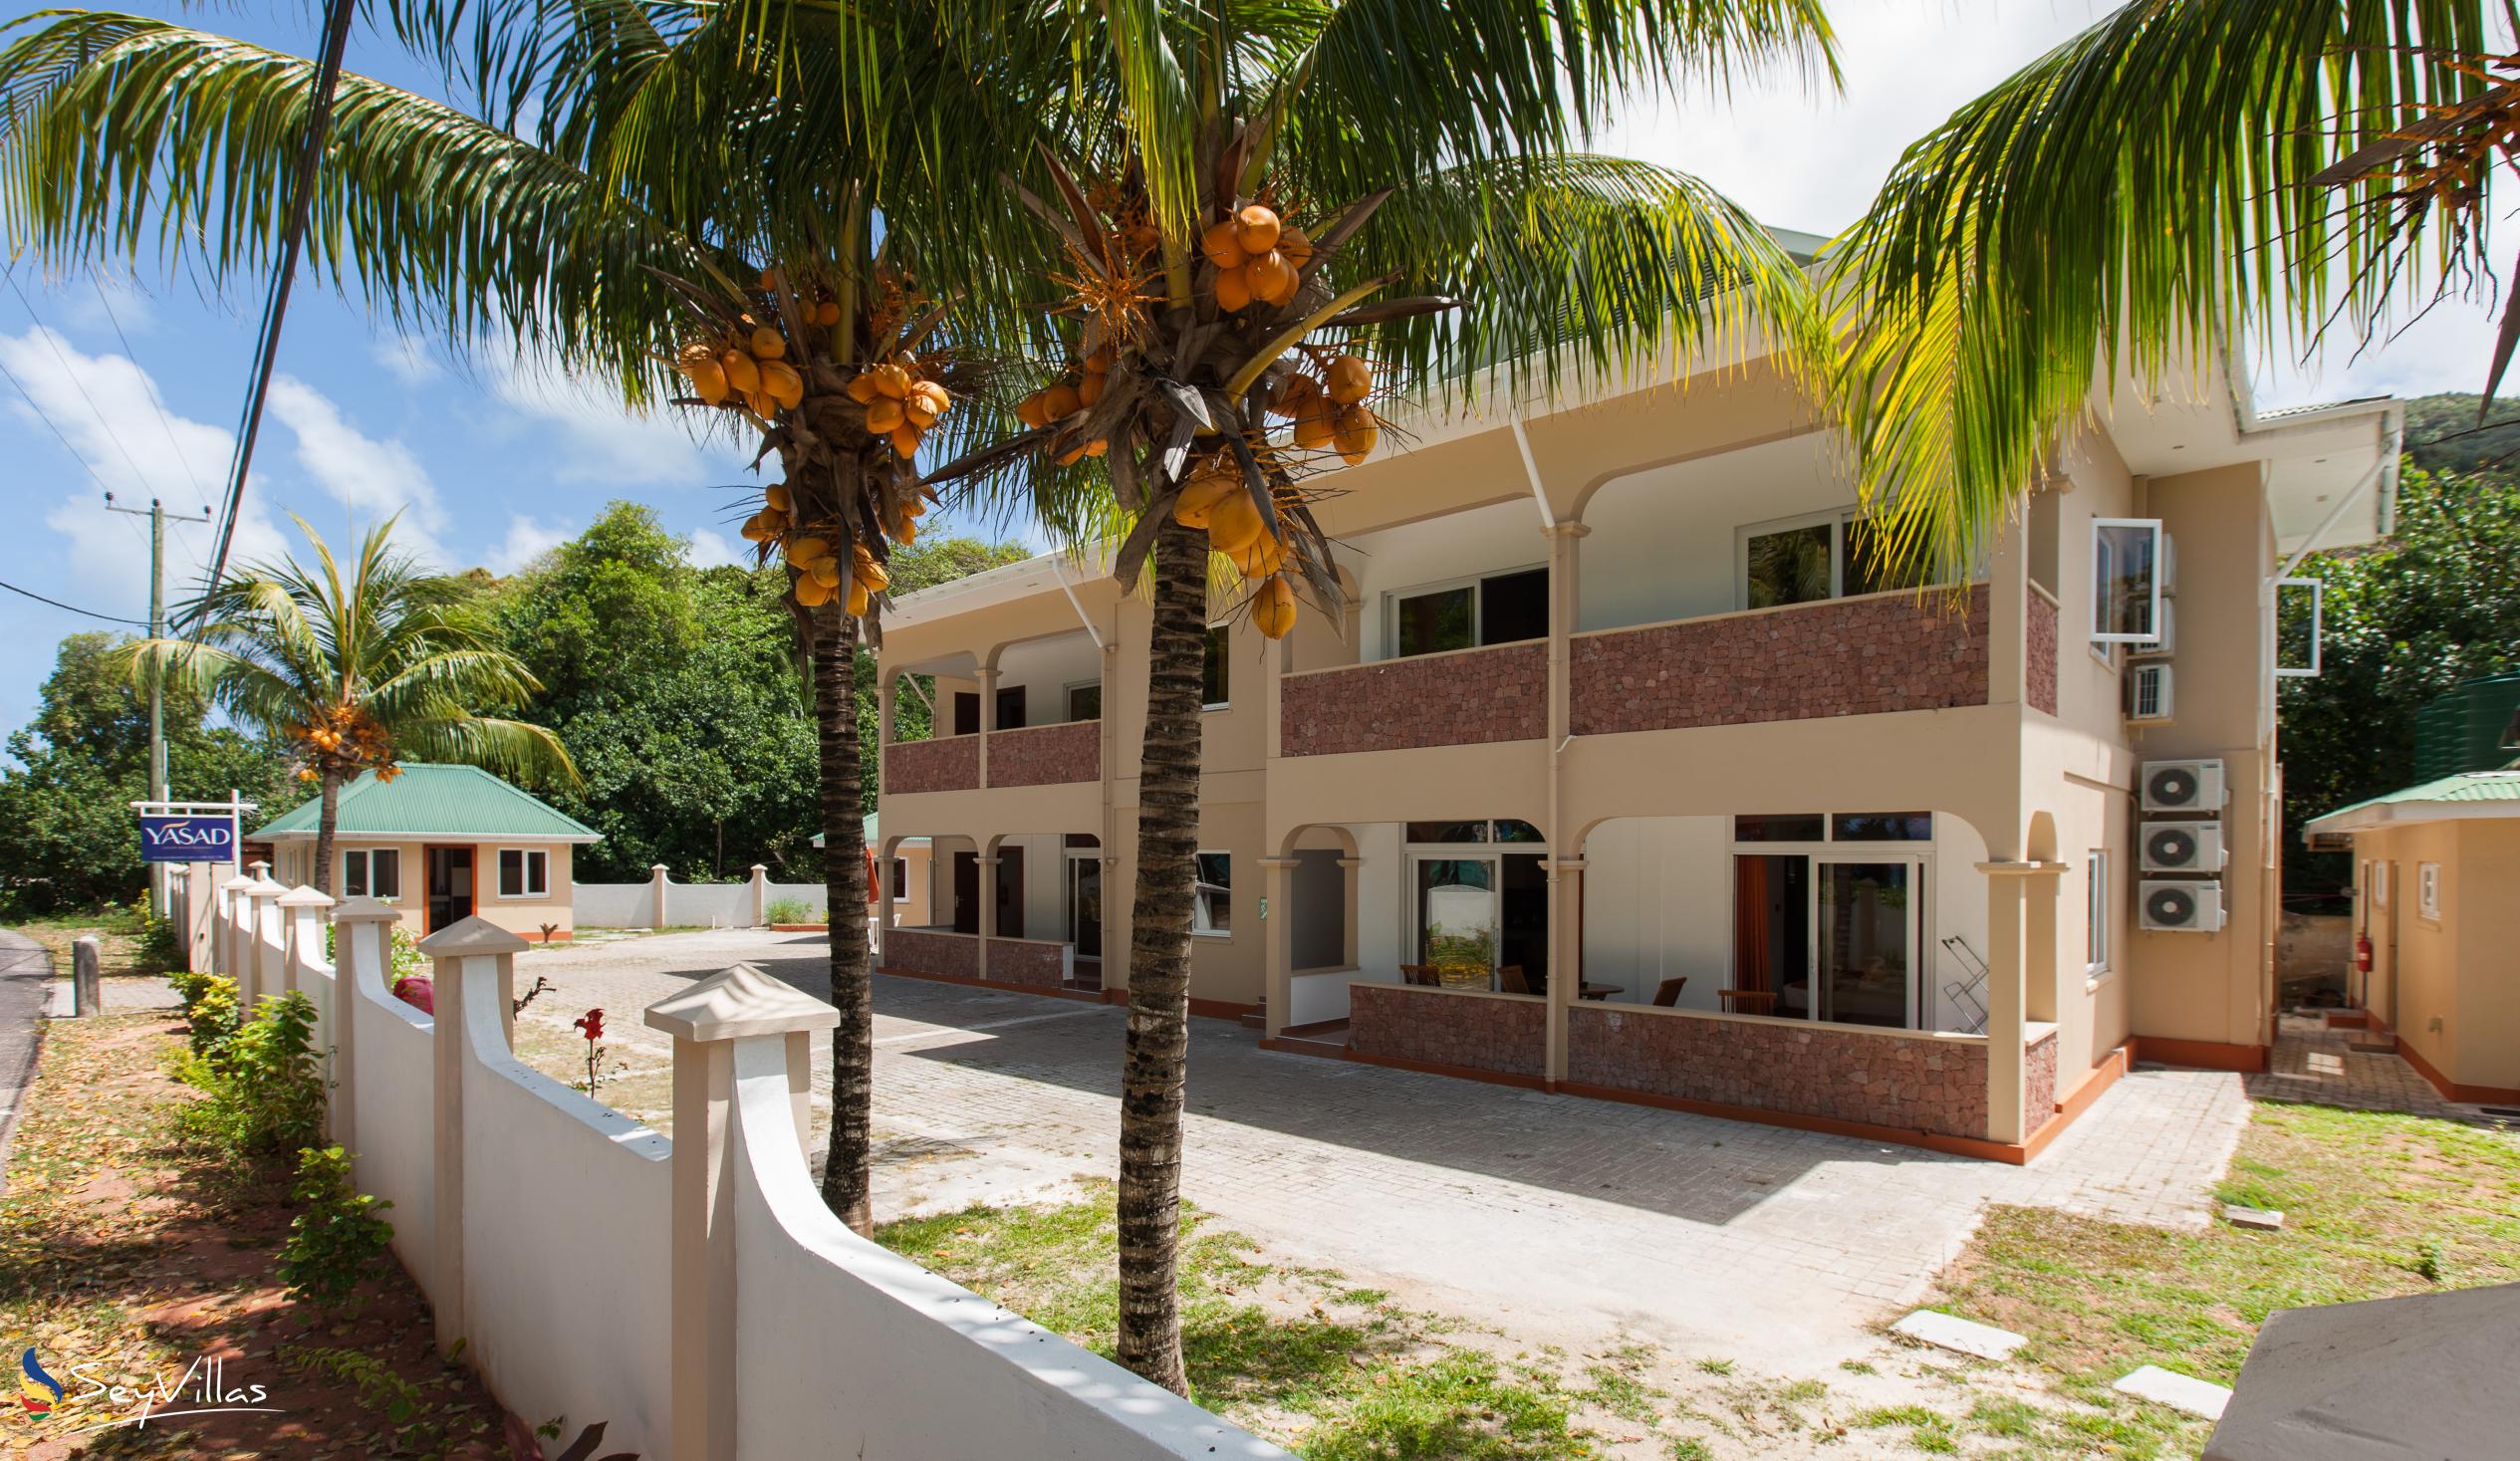 Foto 47: YASAD Luxury Beach Residence - Appartement 2 chambres - Praslin (Seychelles)